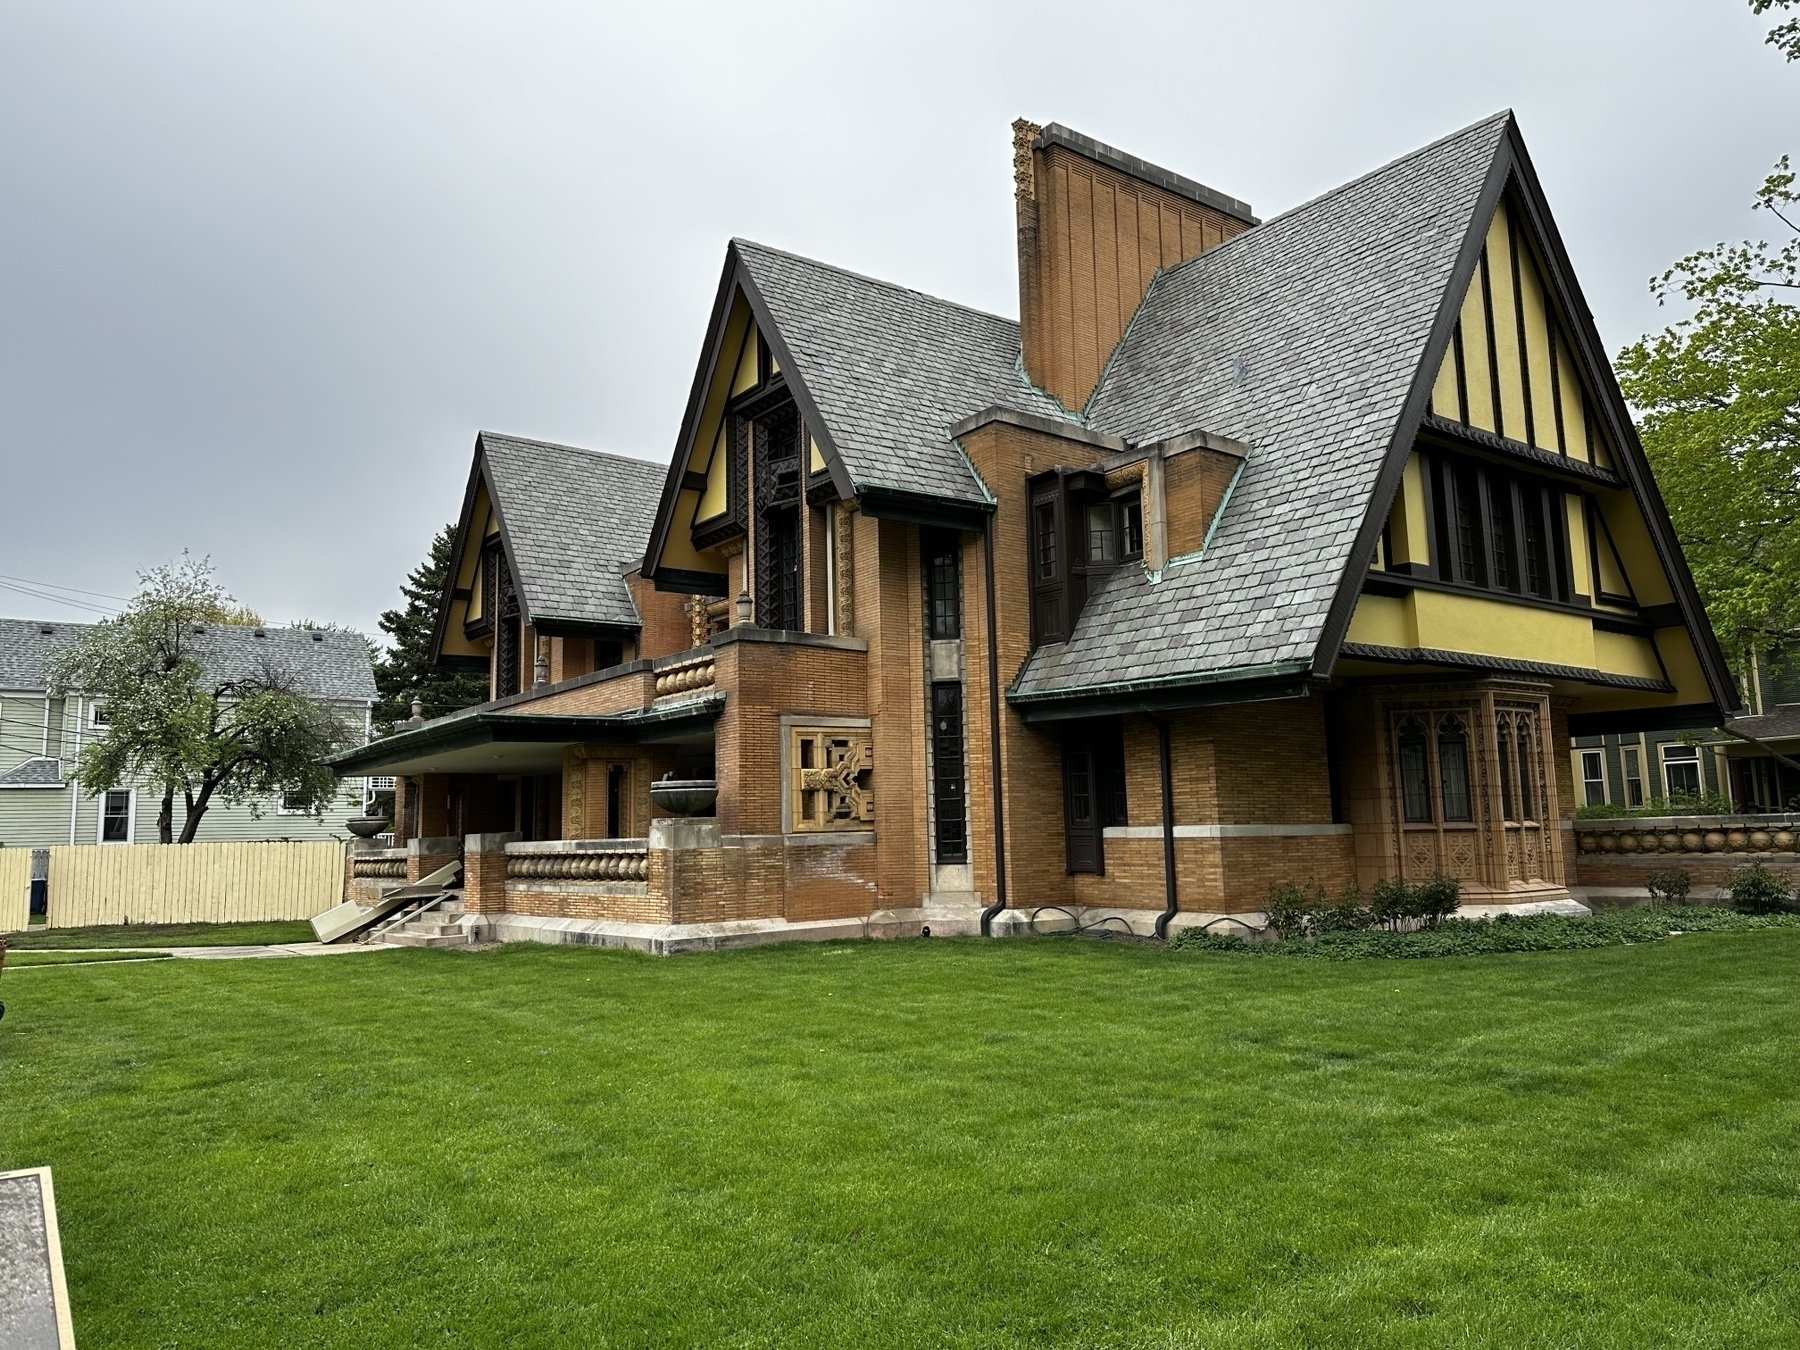 A Frank Lloyd Wright designed home in Oak Park, IL